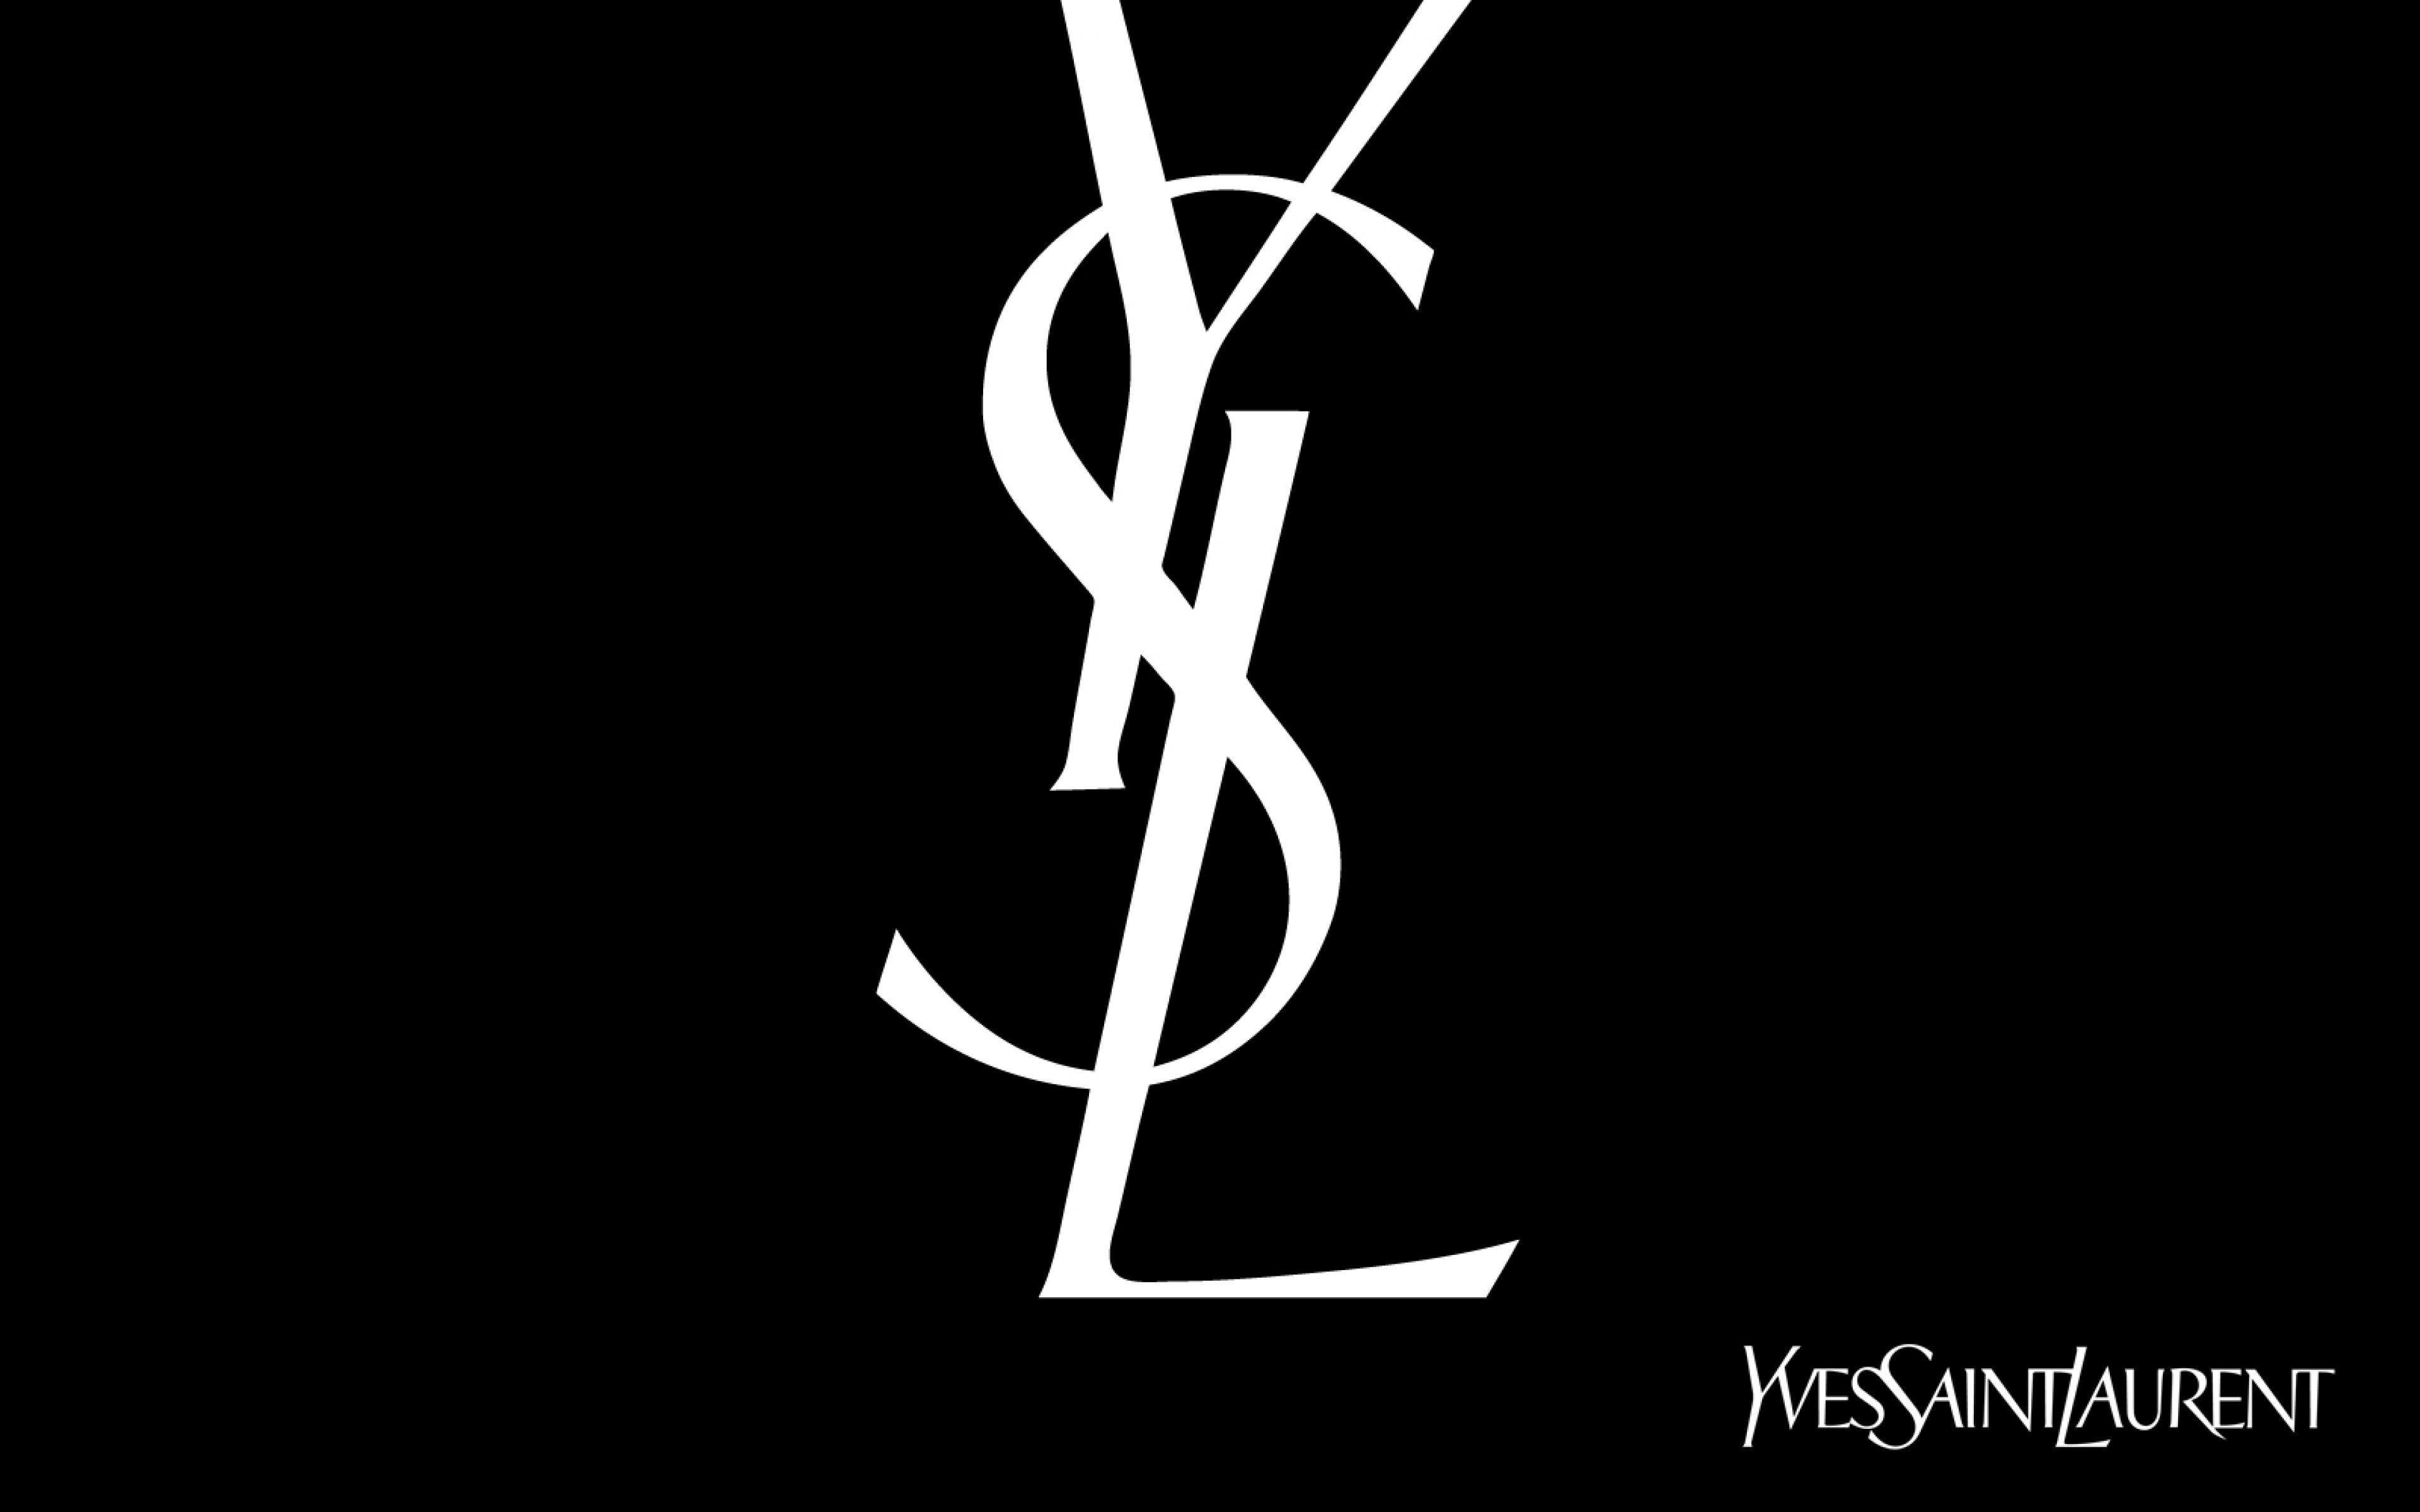 Yves Saint Laurent Wallpapers - Top Free Yves Saint Laurent Backgrounds